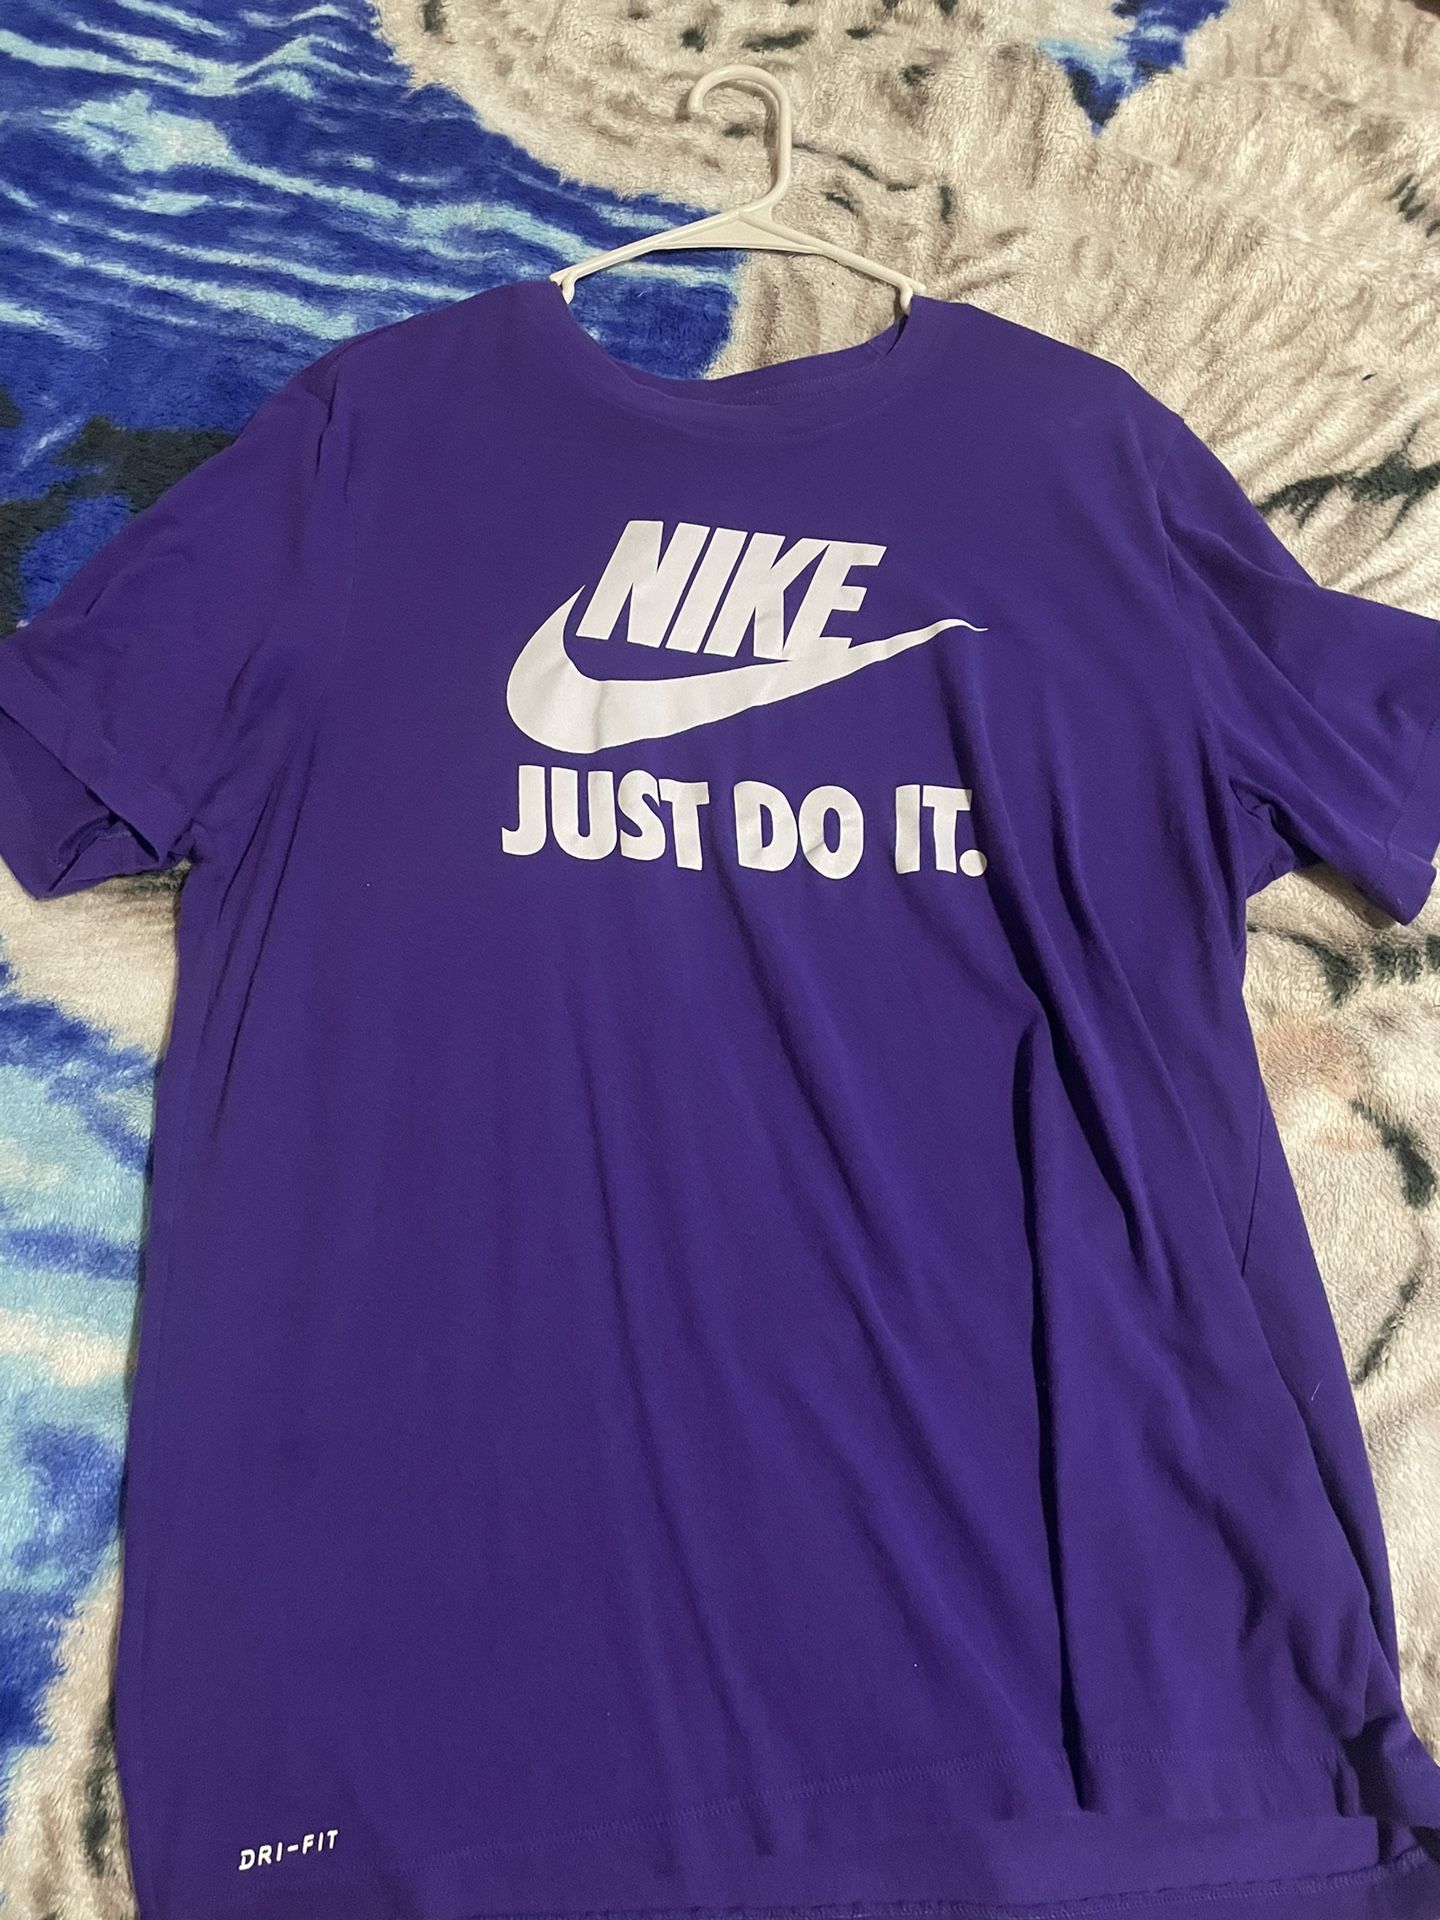 Nike shirts